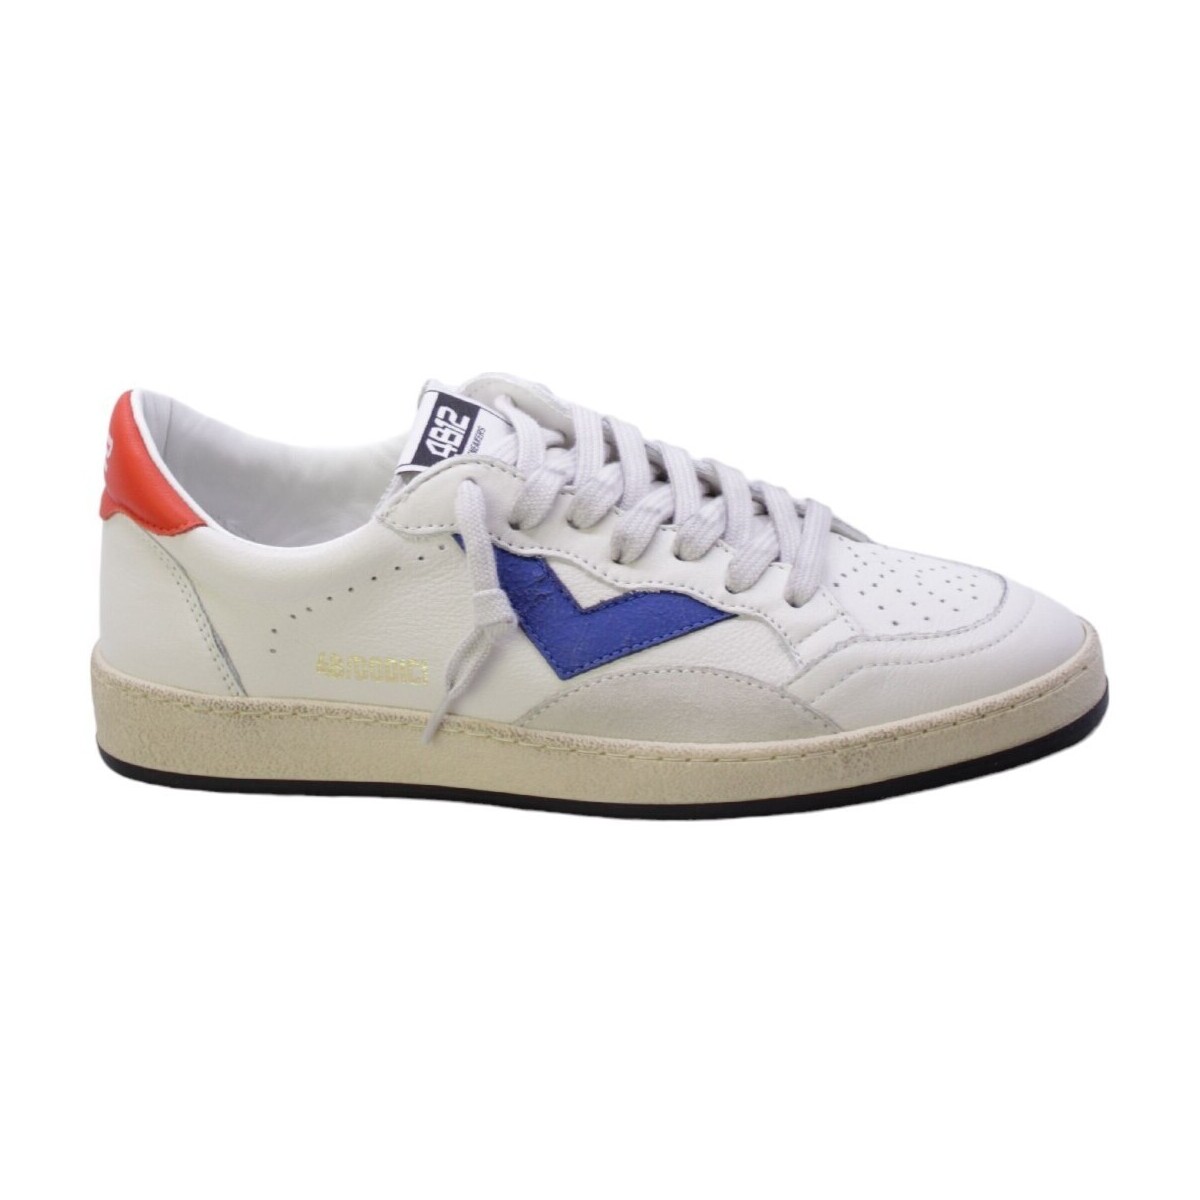 Schoenen Heren Lage sneakers 4B12 Sneakers Uomo Bianco/Arancio/Blue Playnew-u50 Wit